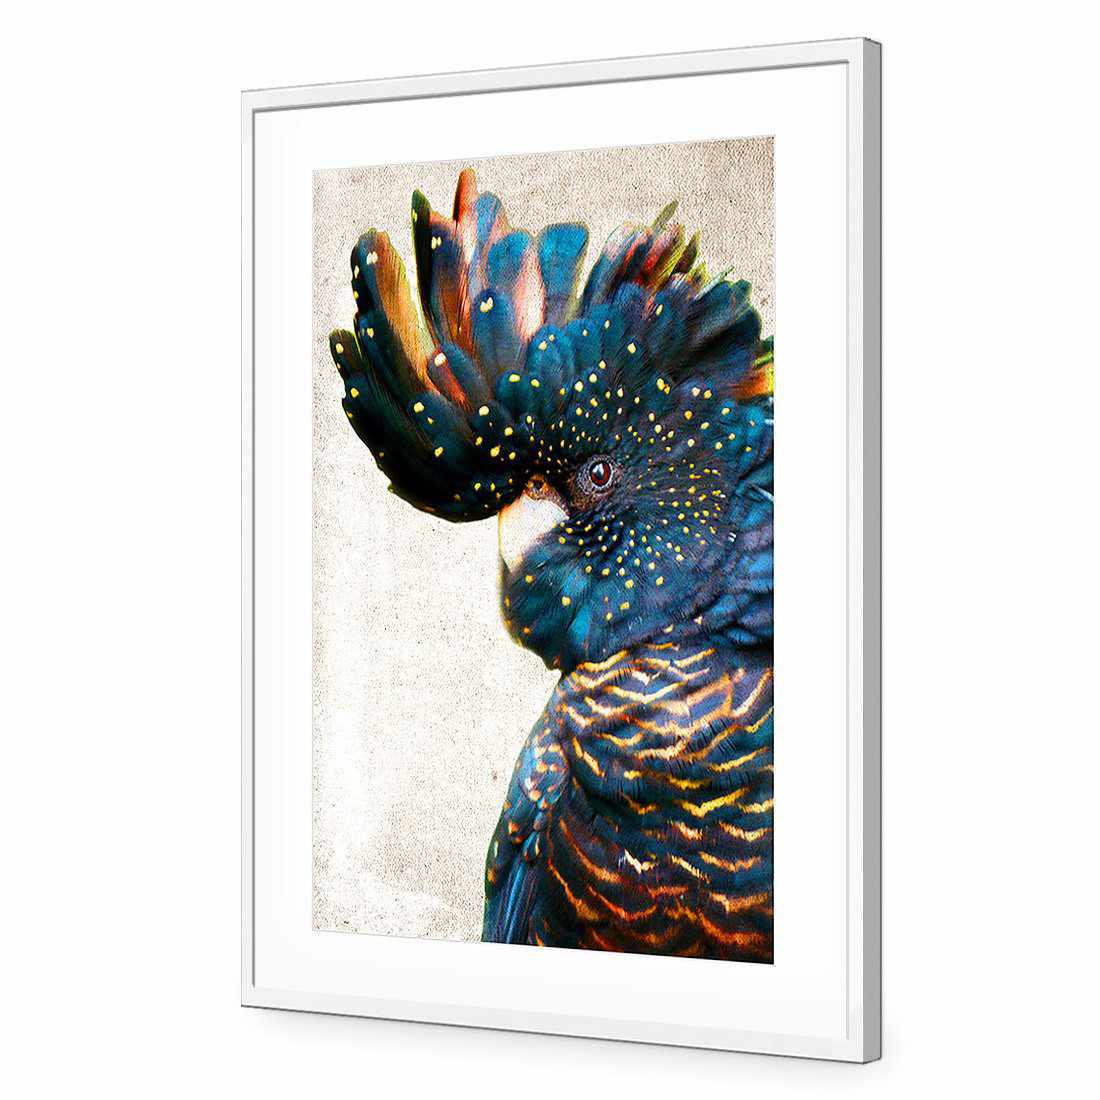 Black Cockatoo Side, Grunge Acrylic Glass Art-Acrylic-Wall Art Designs-With Border-Acrylic - White Frame-45x30cm-Wall Art Designs